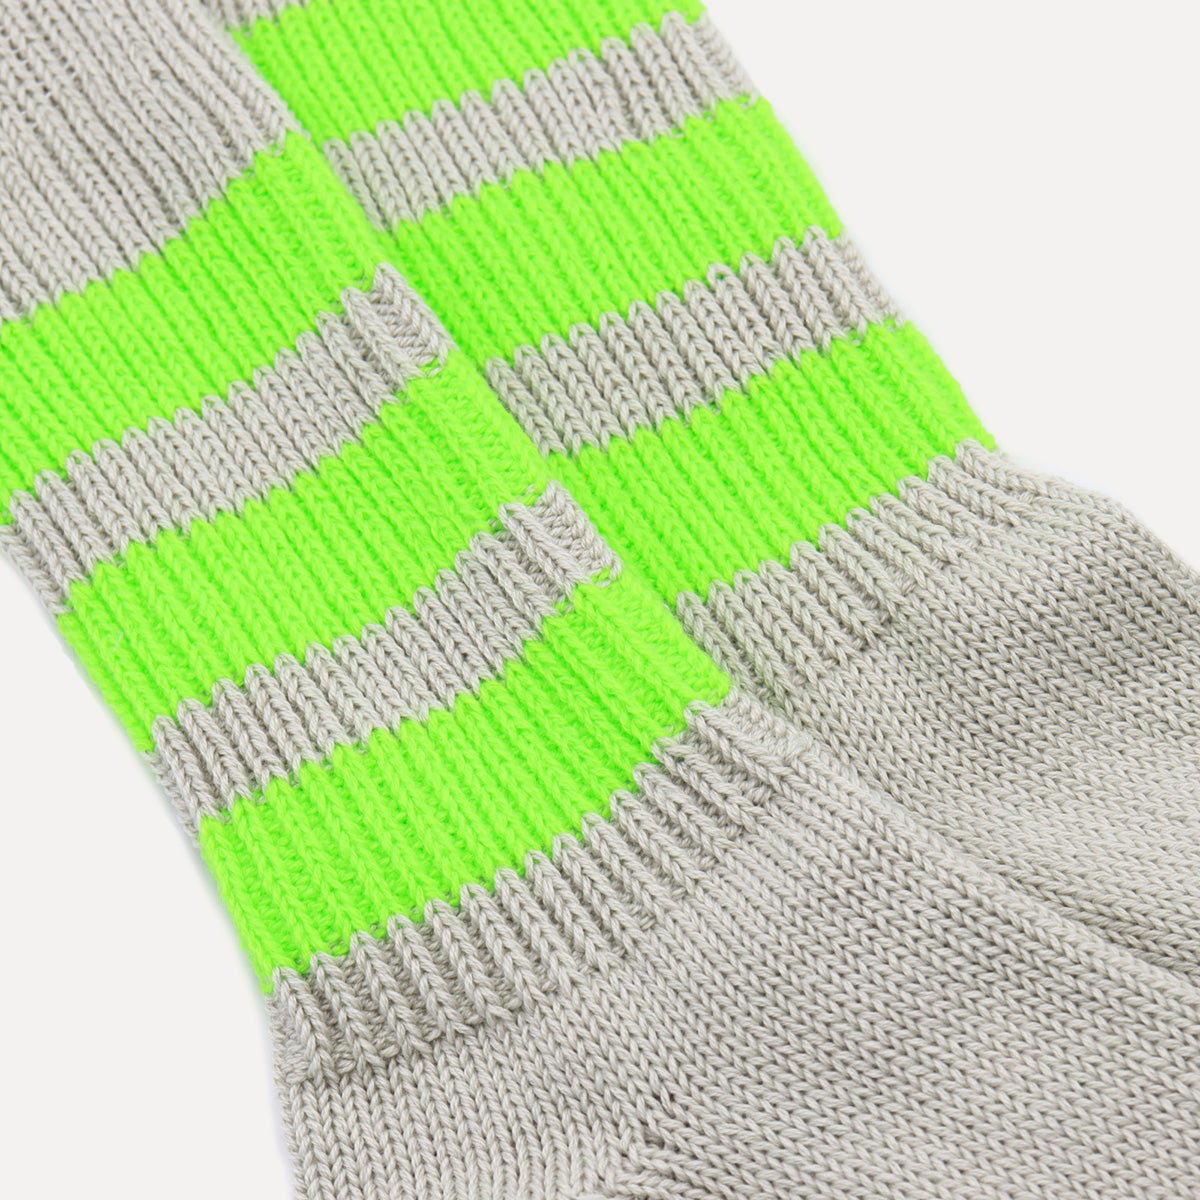 Rostersox Green Boston Socks